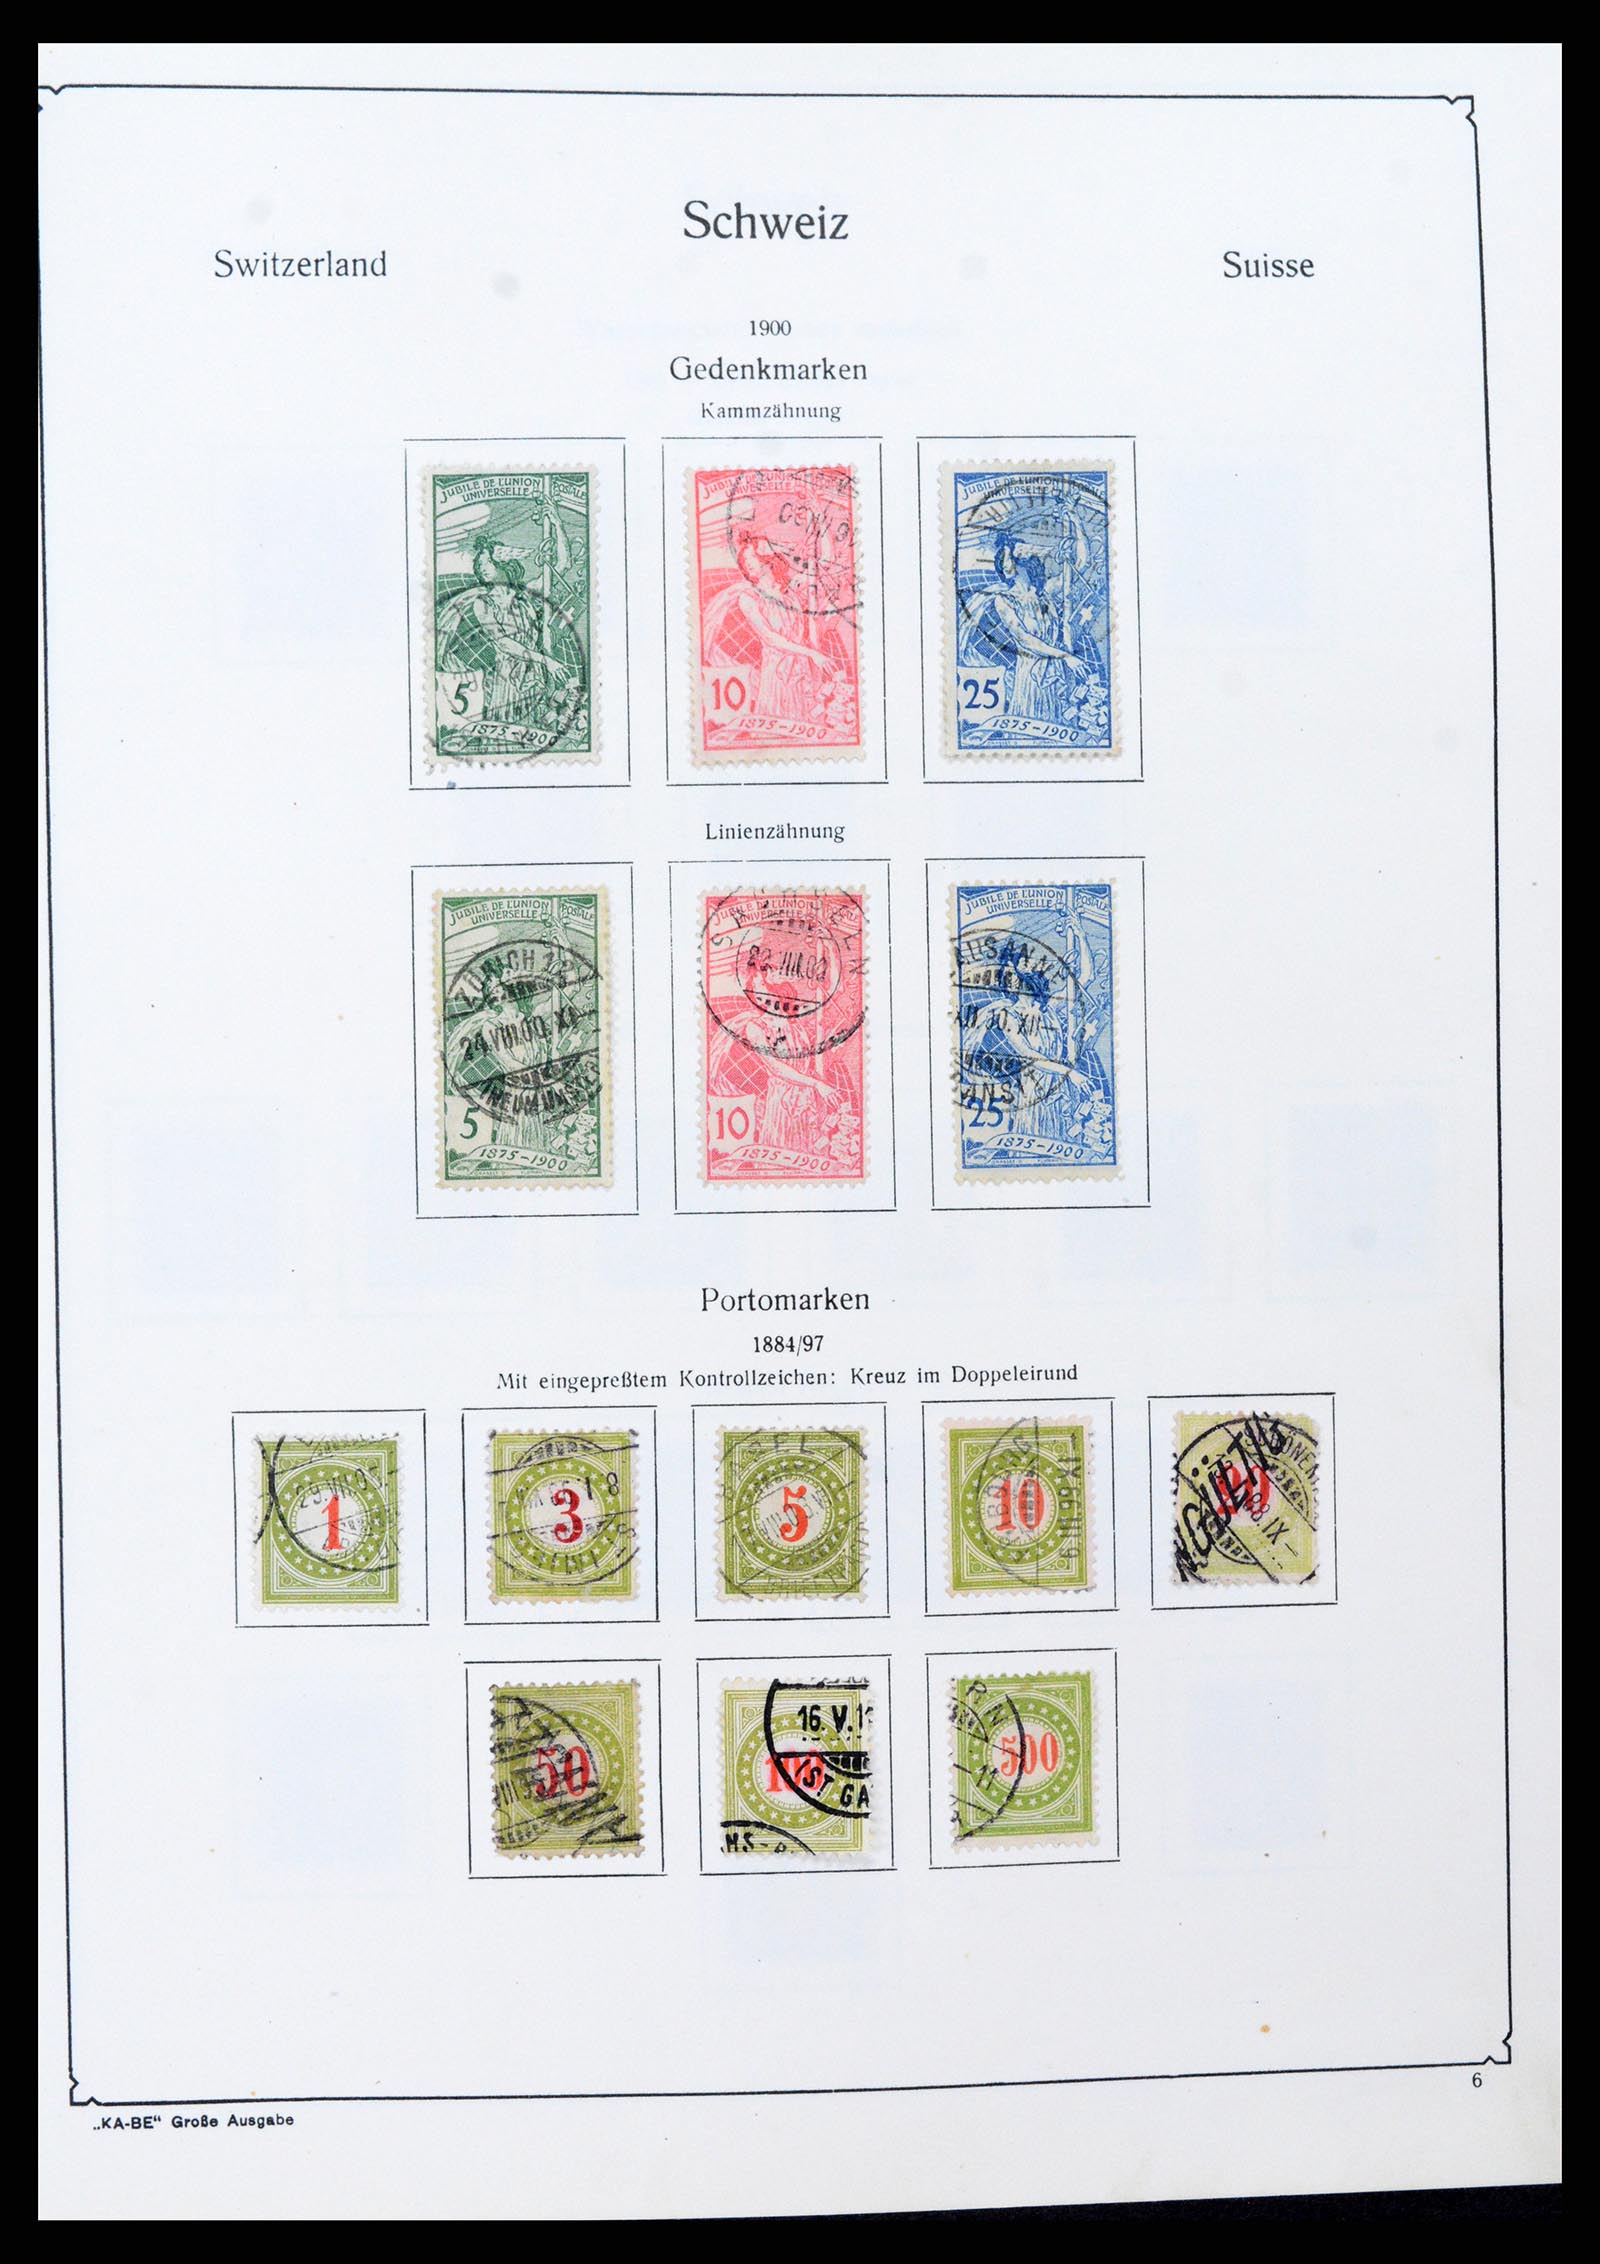 37588 005 - Stamp collection 37588 Switzerland 1854-1974.